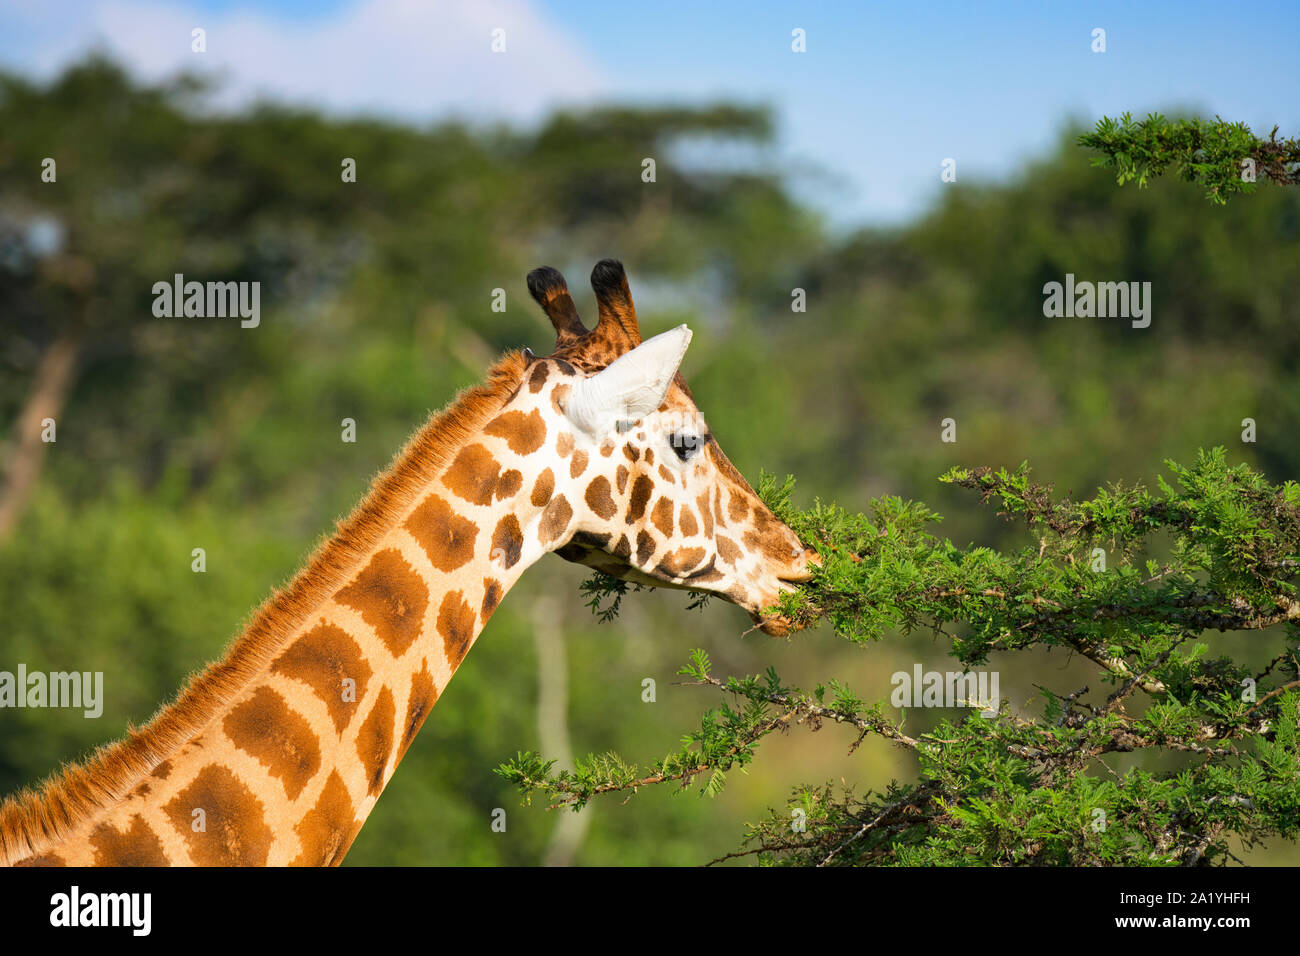 Giraffe browsing on Acacia, (Giraffa) browsing leaves of Acacia Tree, Lake Mburo National Park, Uganda, East Africa Stock Photo